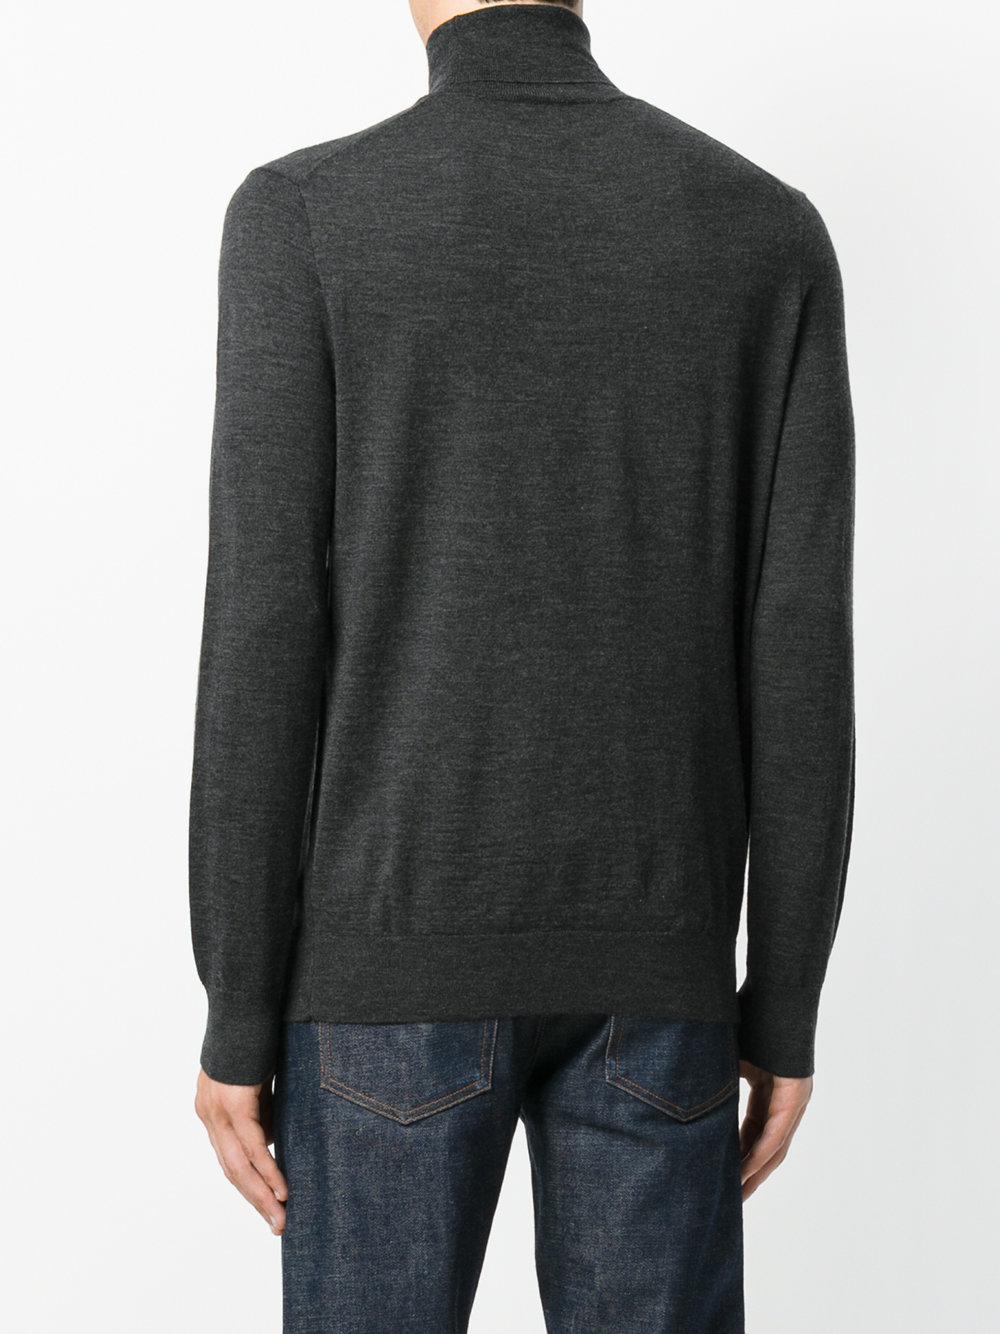 Polo Ralph Lauren Wool Turtleneck Sweater in Gray for Men - Lyst